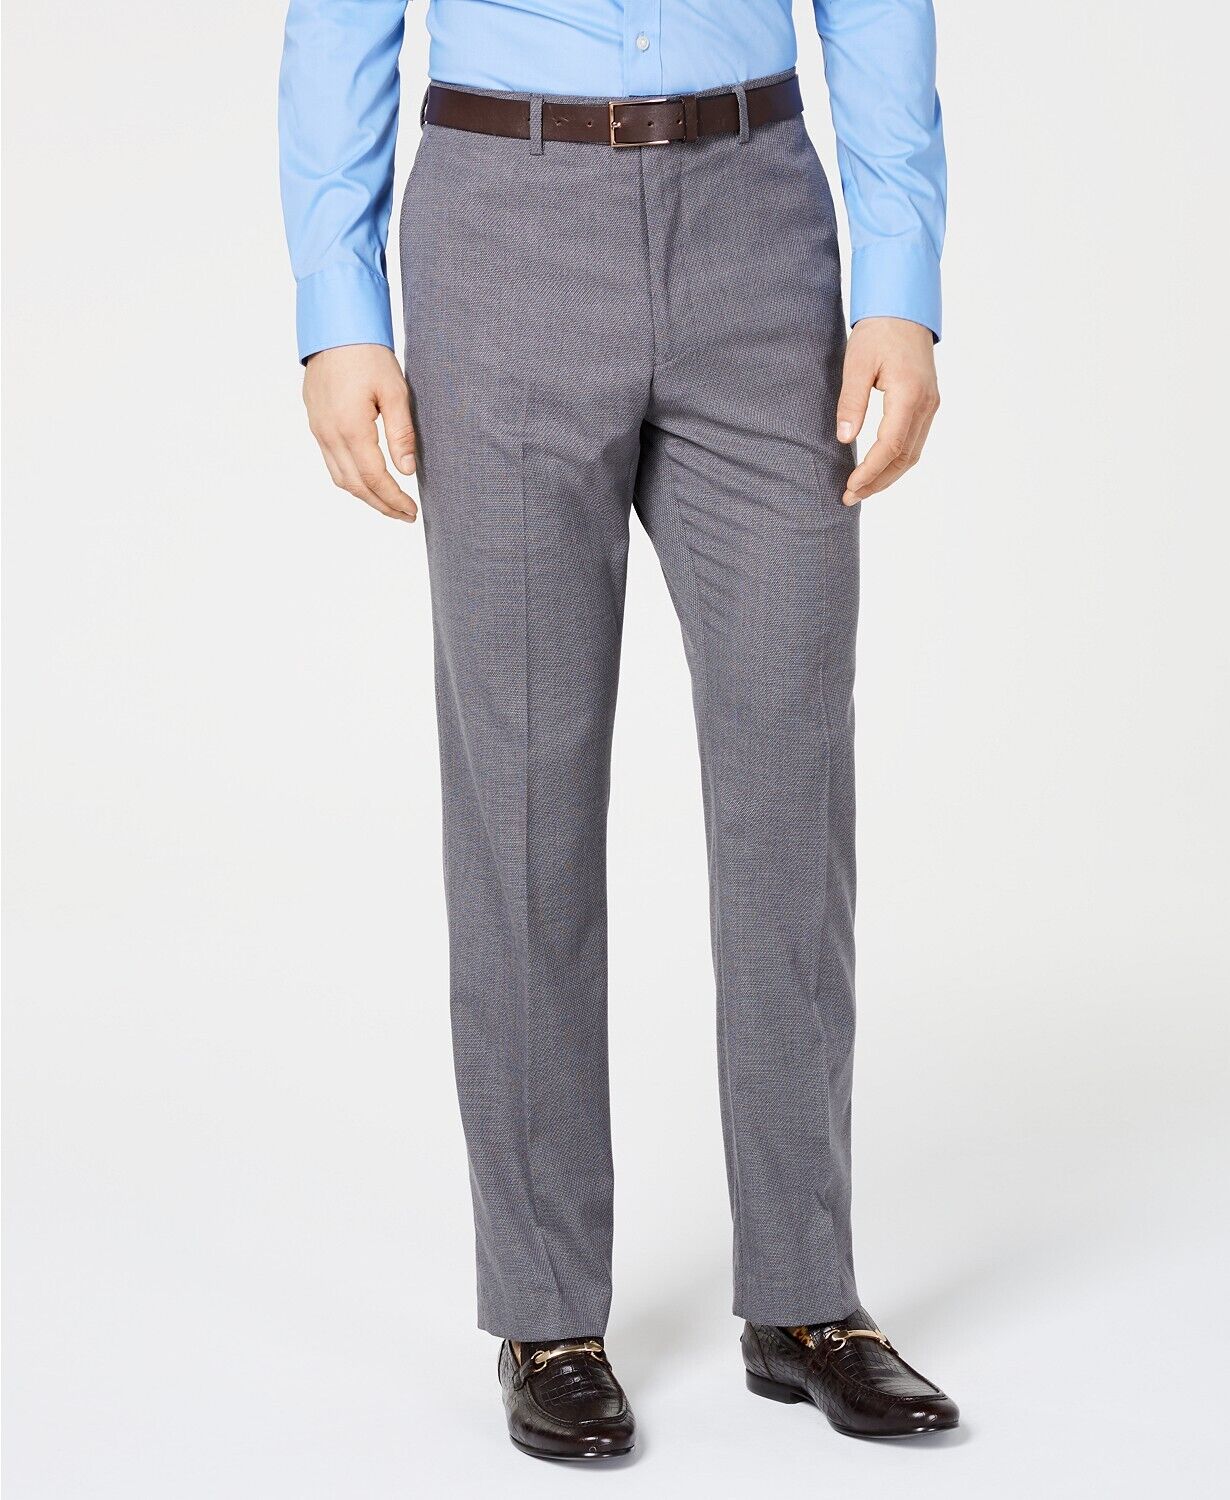 Vince Camuto Mens Gray Dress Pants 30 x 30 Slim Stretch Wrinkle-Resistant